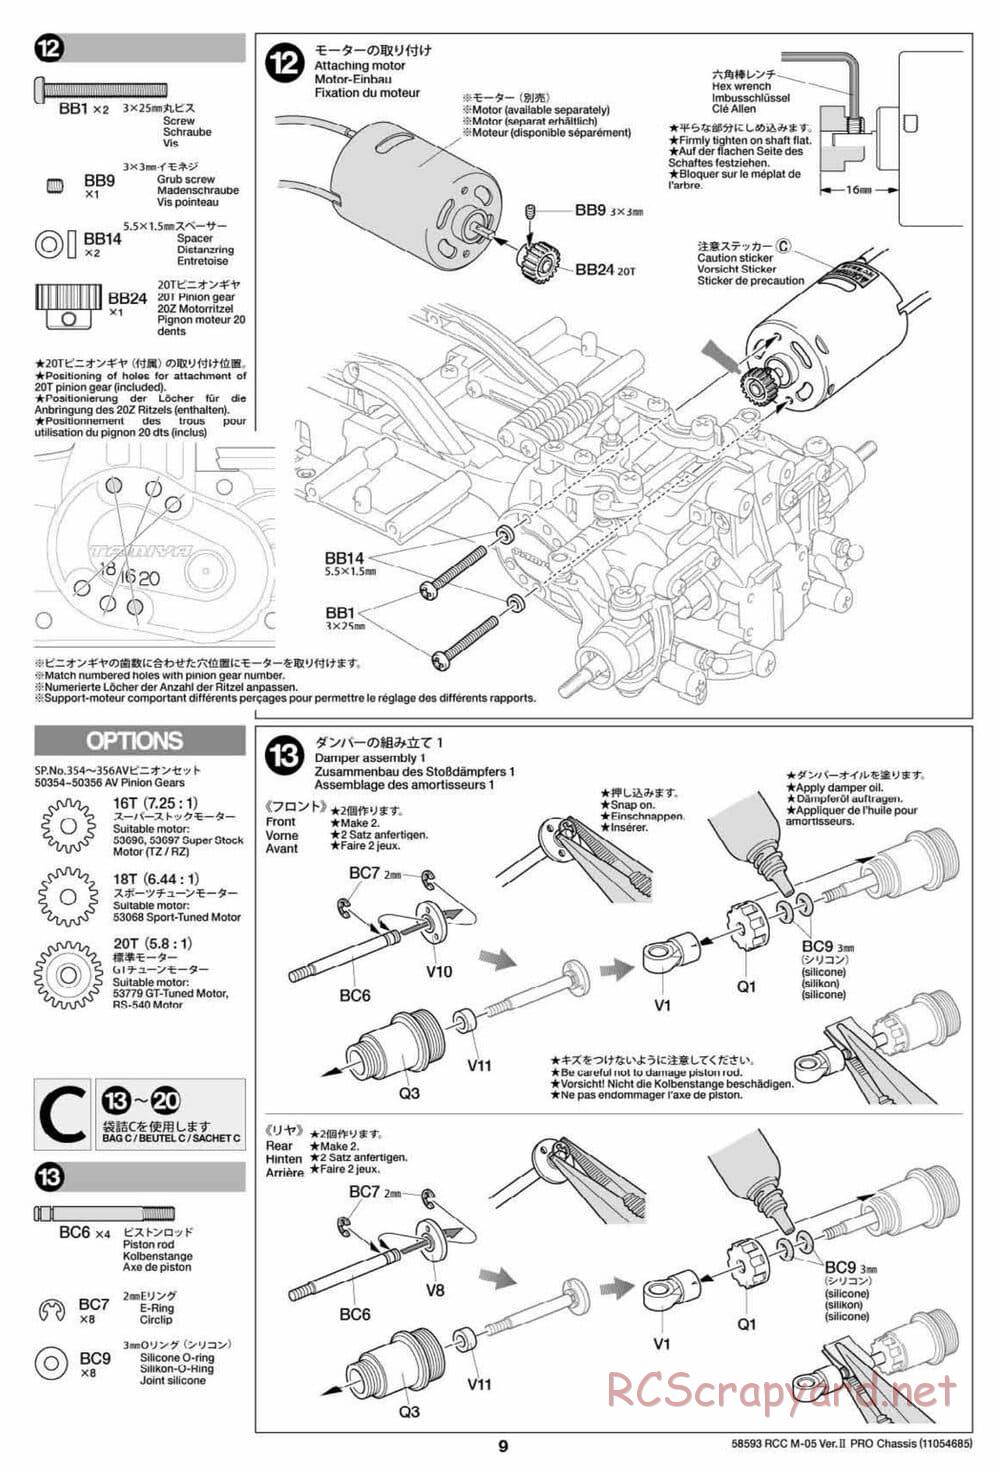 Tamiya - M-05 Ver.II Pro Chassis - Manual - Page 9